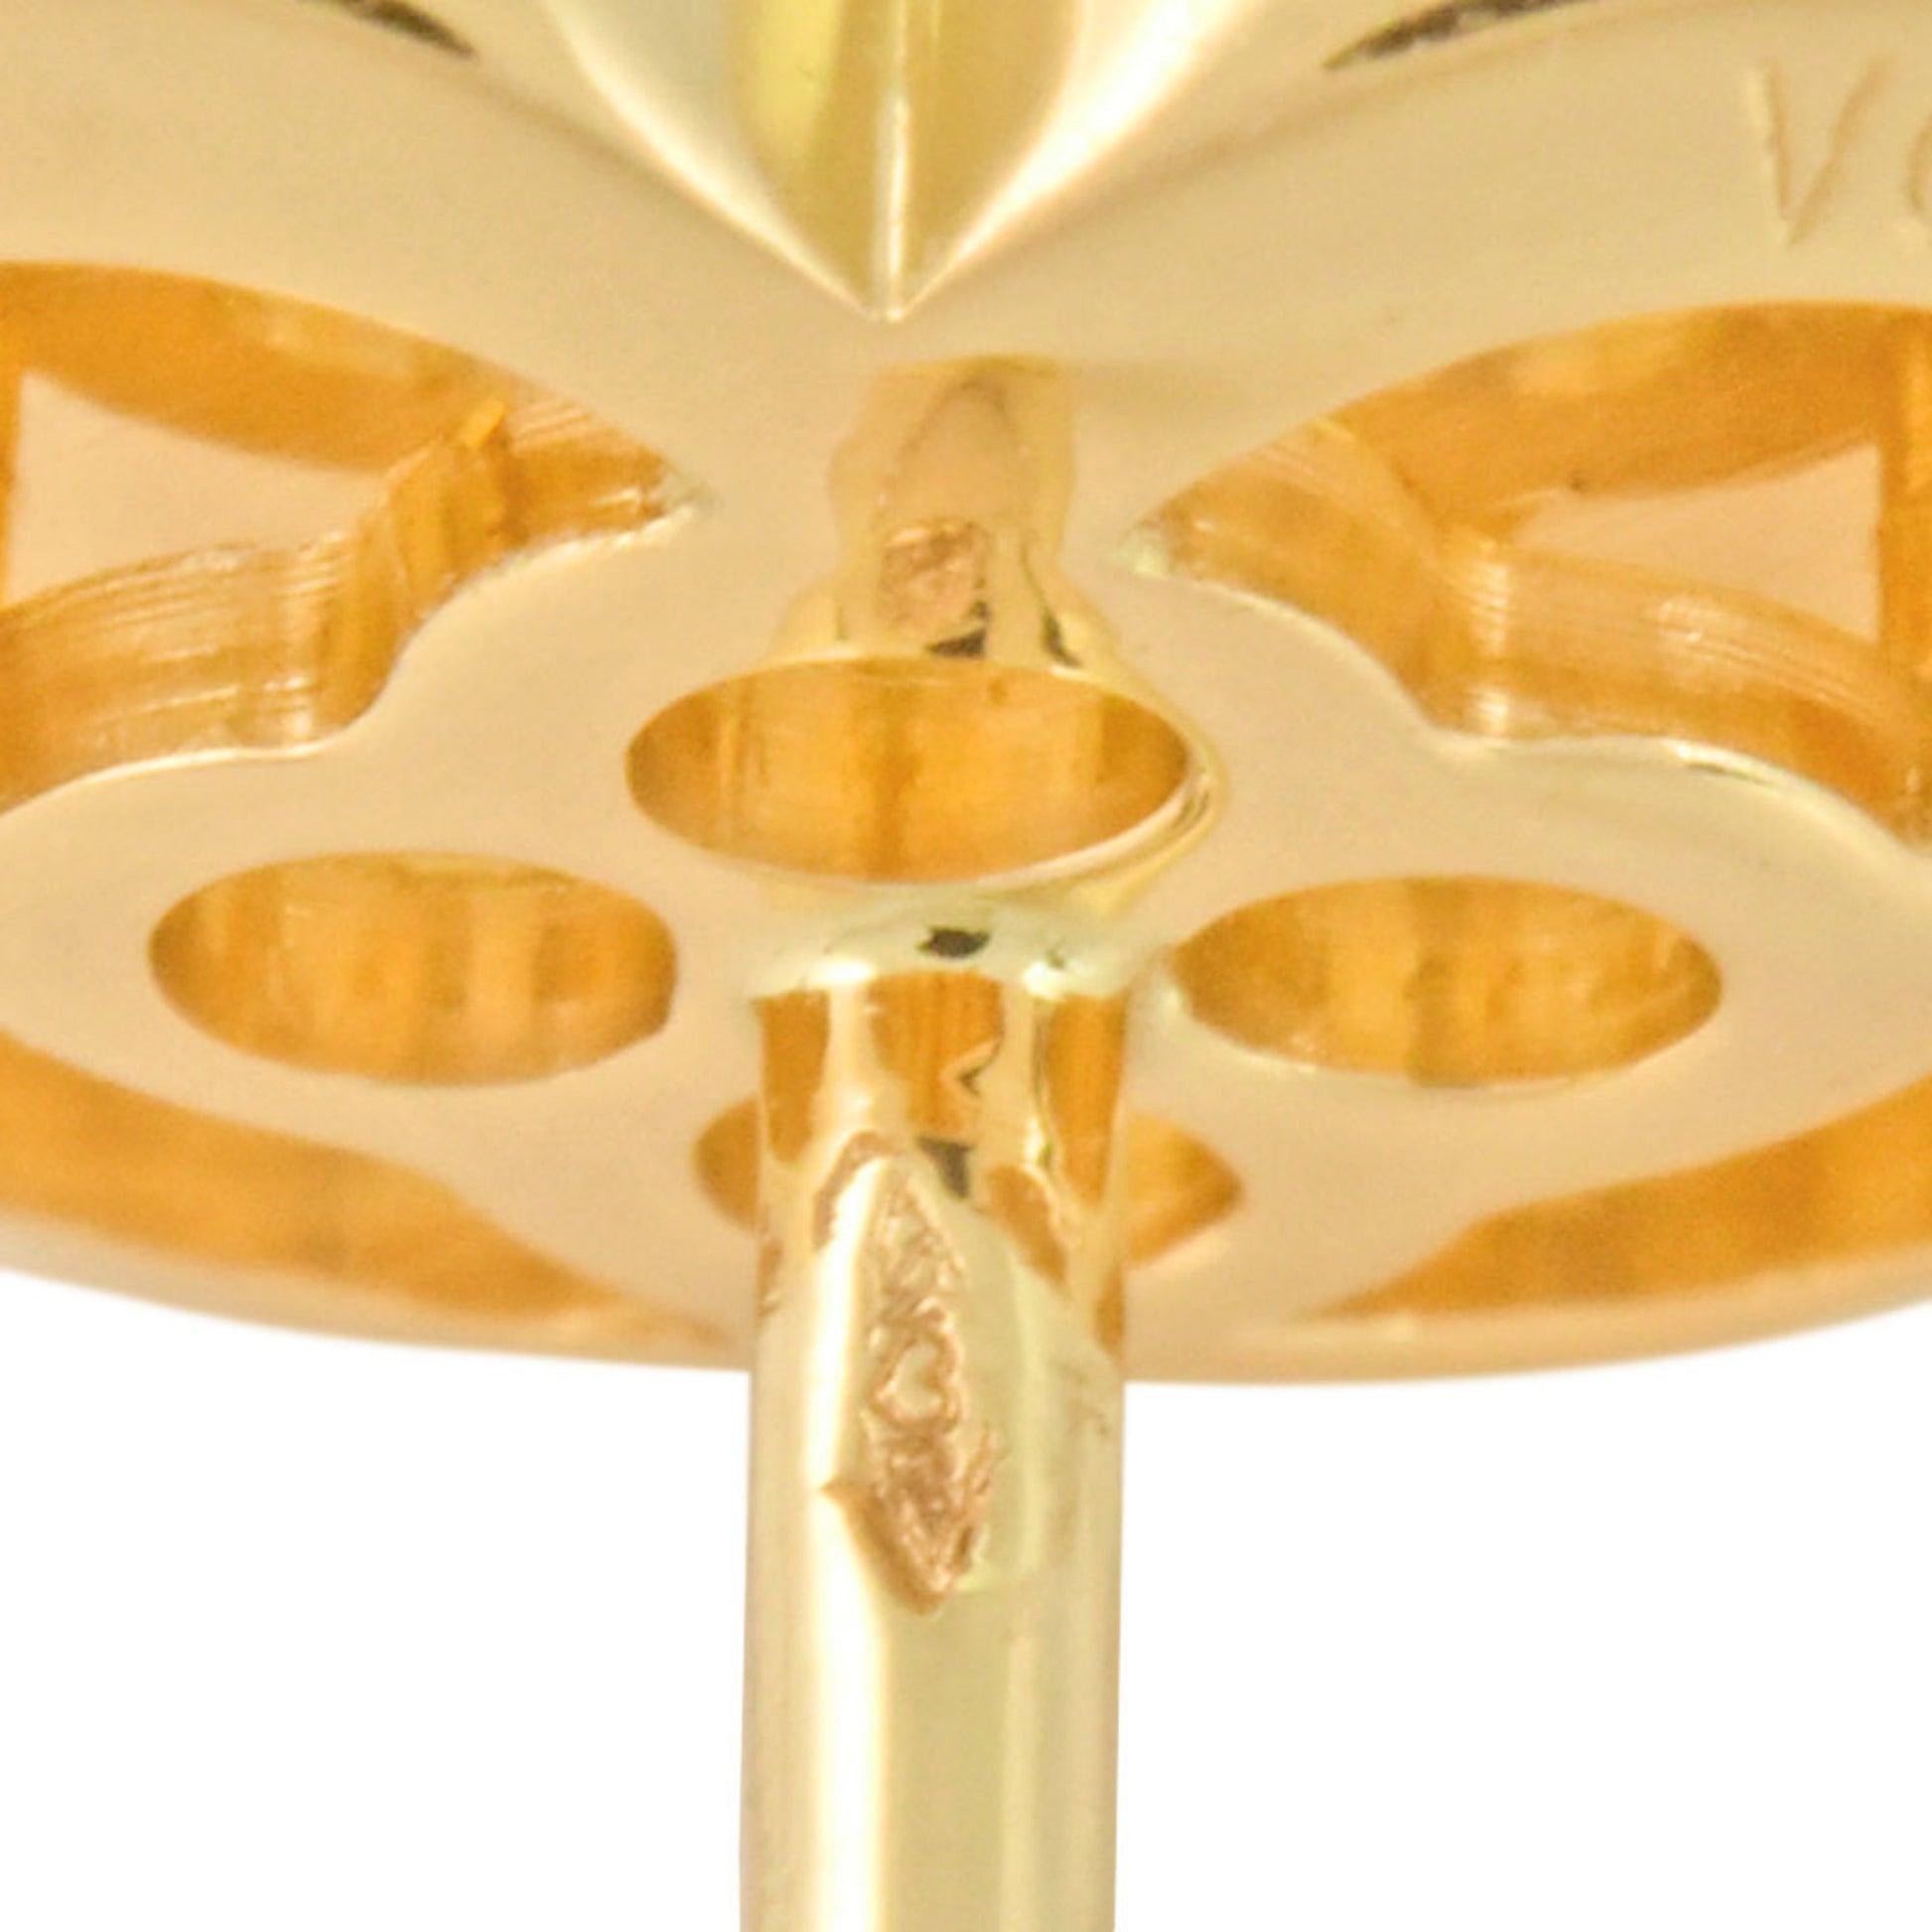 Van Cleef & Arpels Boucles d'oreilles Alhambra en or jaune 18 carats

Informations supplémentaires :
Marque : Van Cleef & Arpels
Genre : Femmes
Ligne : Alhambra
Type de boucle d'oreille : Boucles d'oreilles
MATERIAL : Or jaune (18K)
Condit :